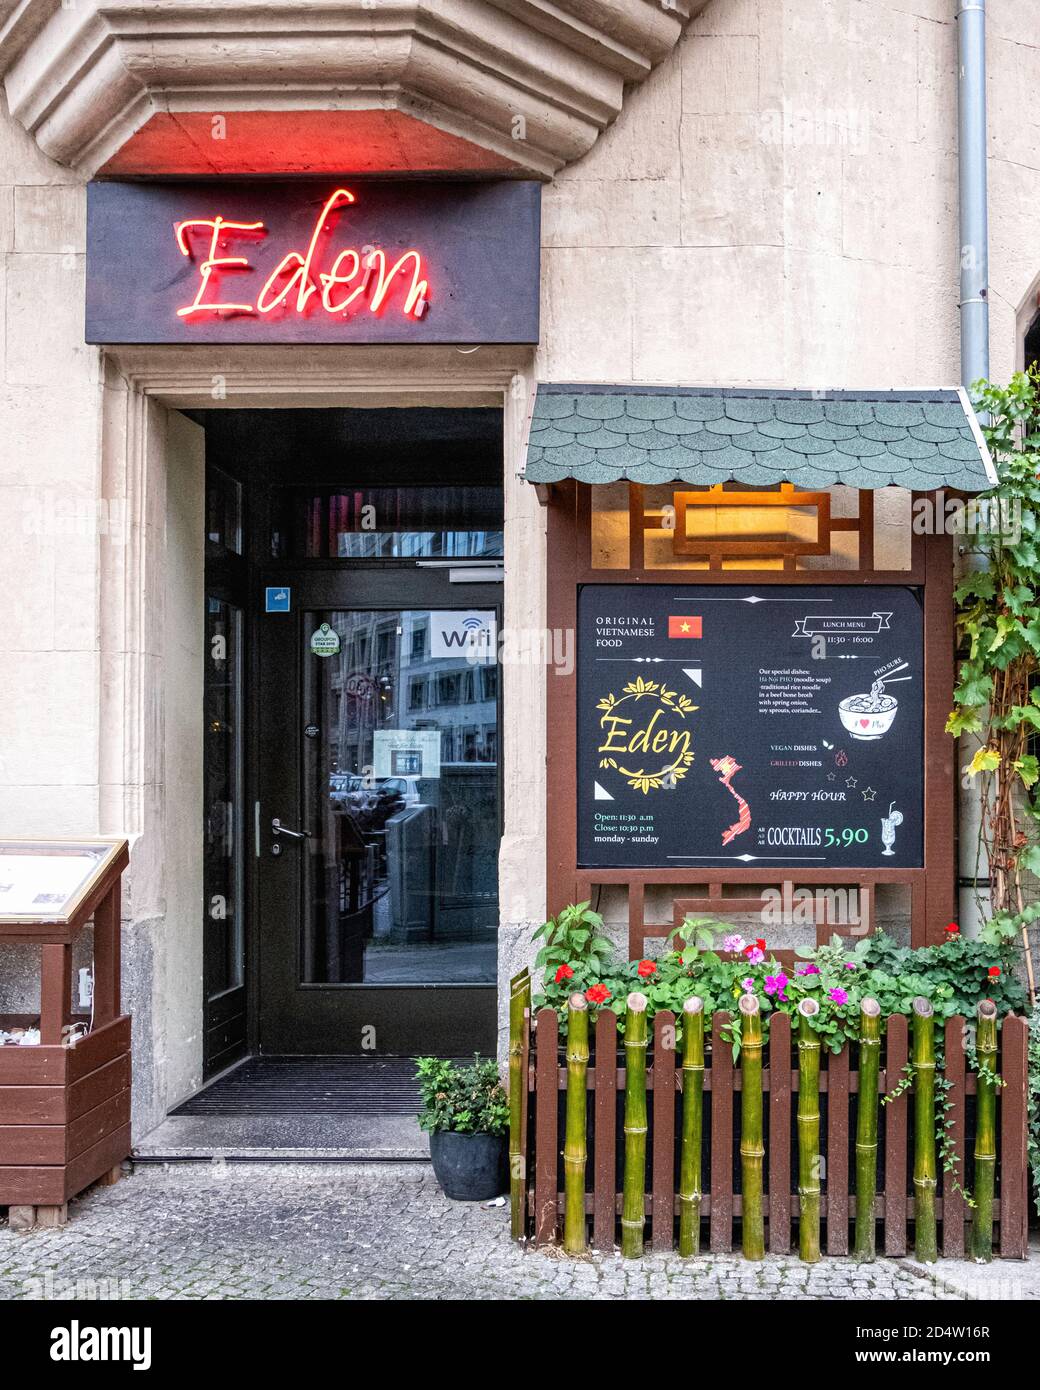 Eden Vietnamese take-away shop exterior & entance,Rosenstraße 19, Mitte, berlin Stock Photo